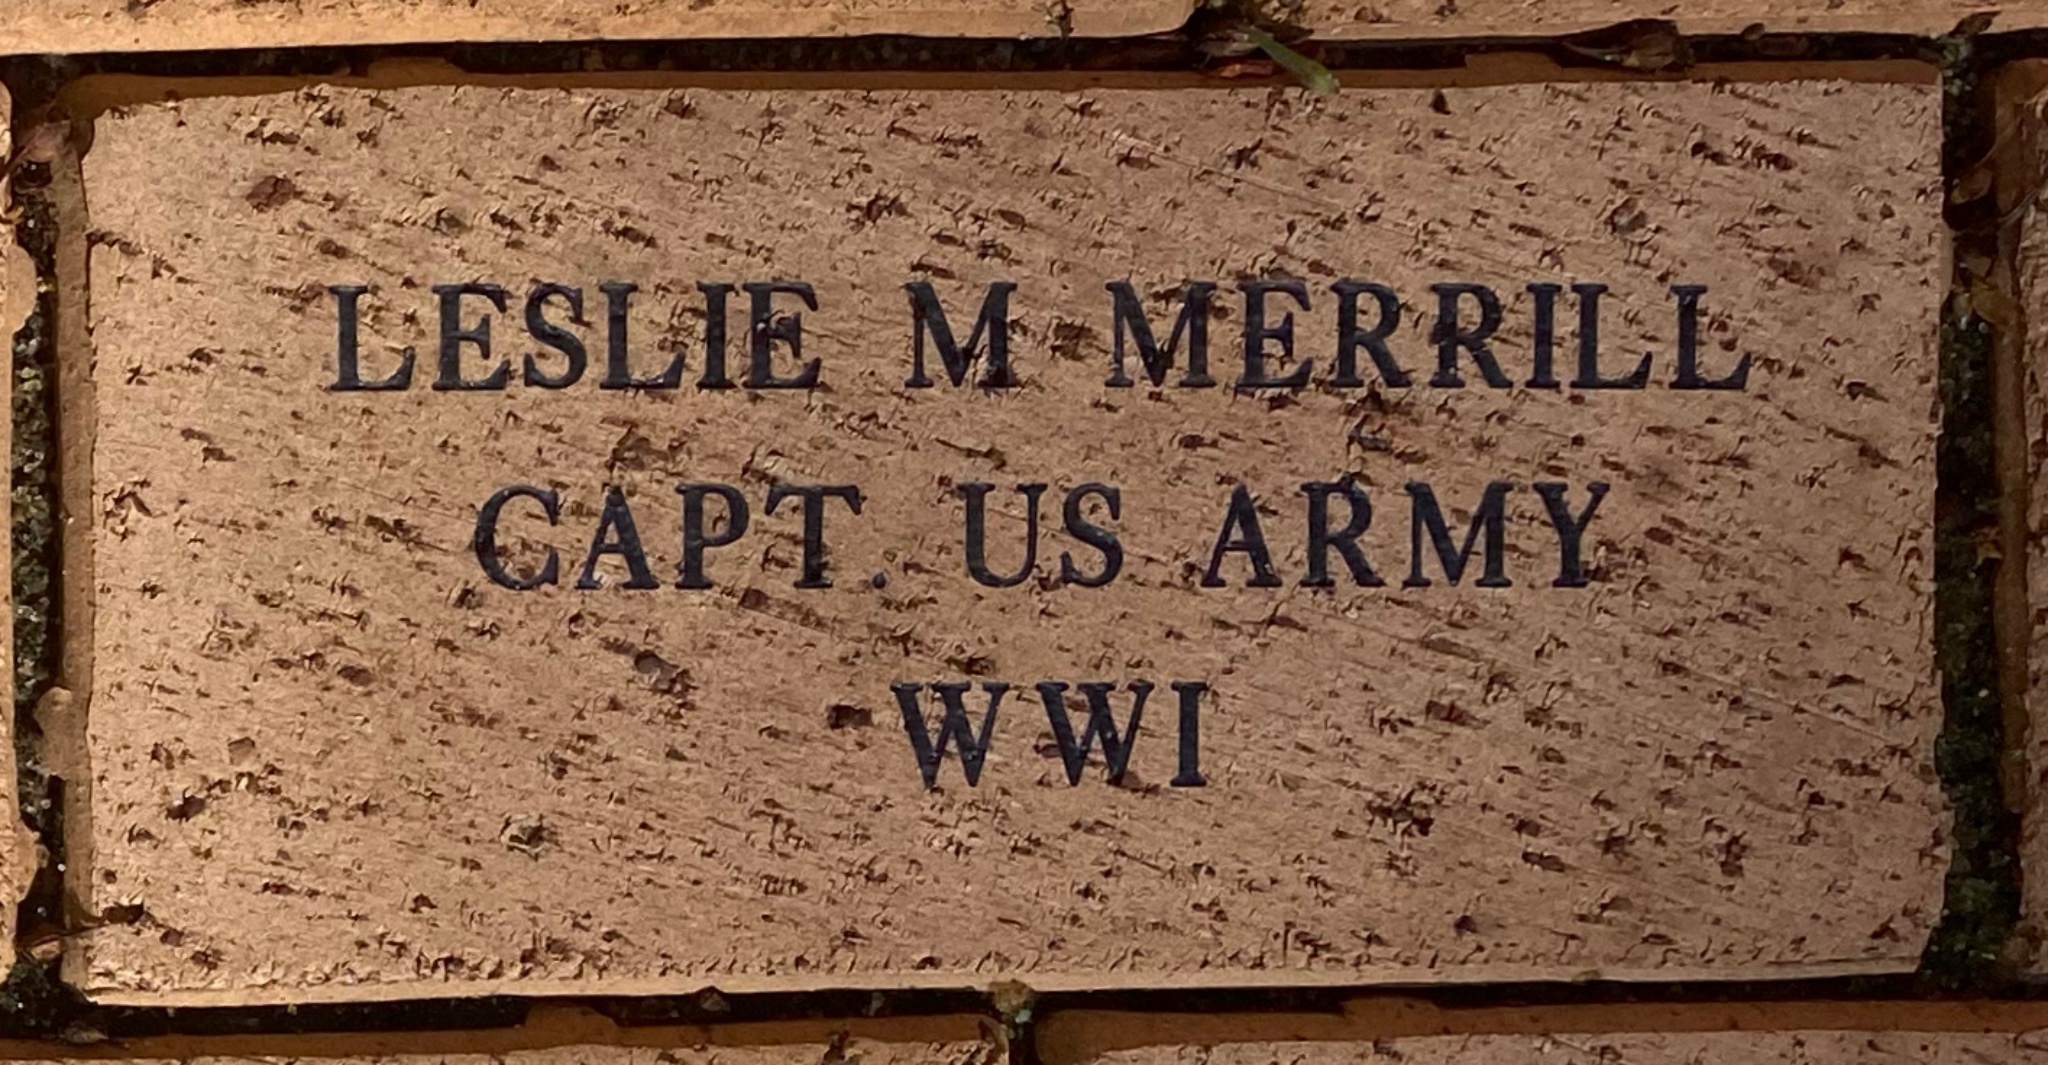 LESLIE M MERRILL CAPT US ARMY WWI